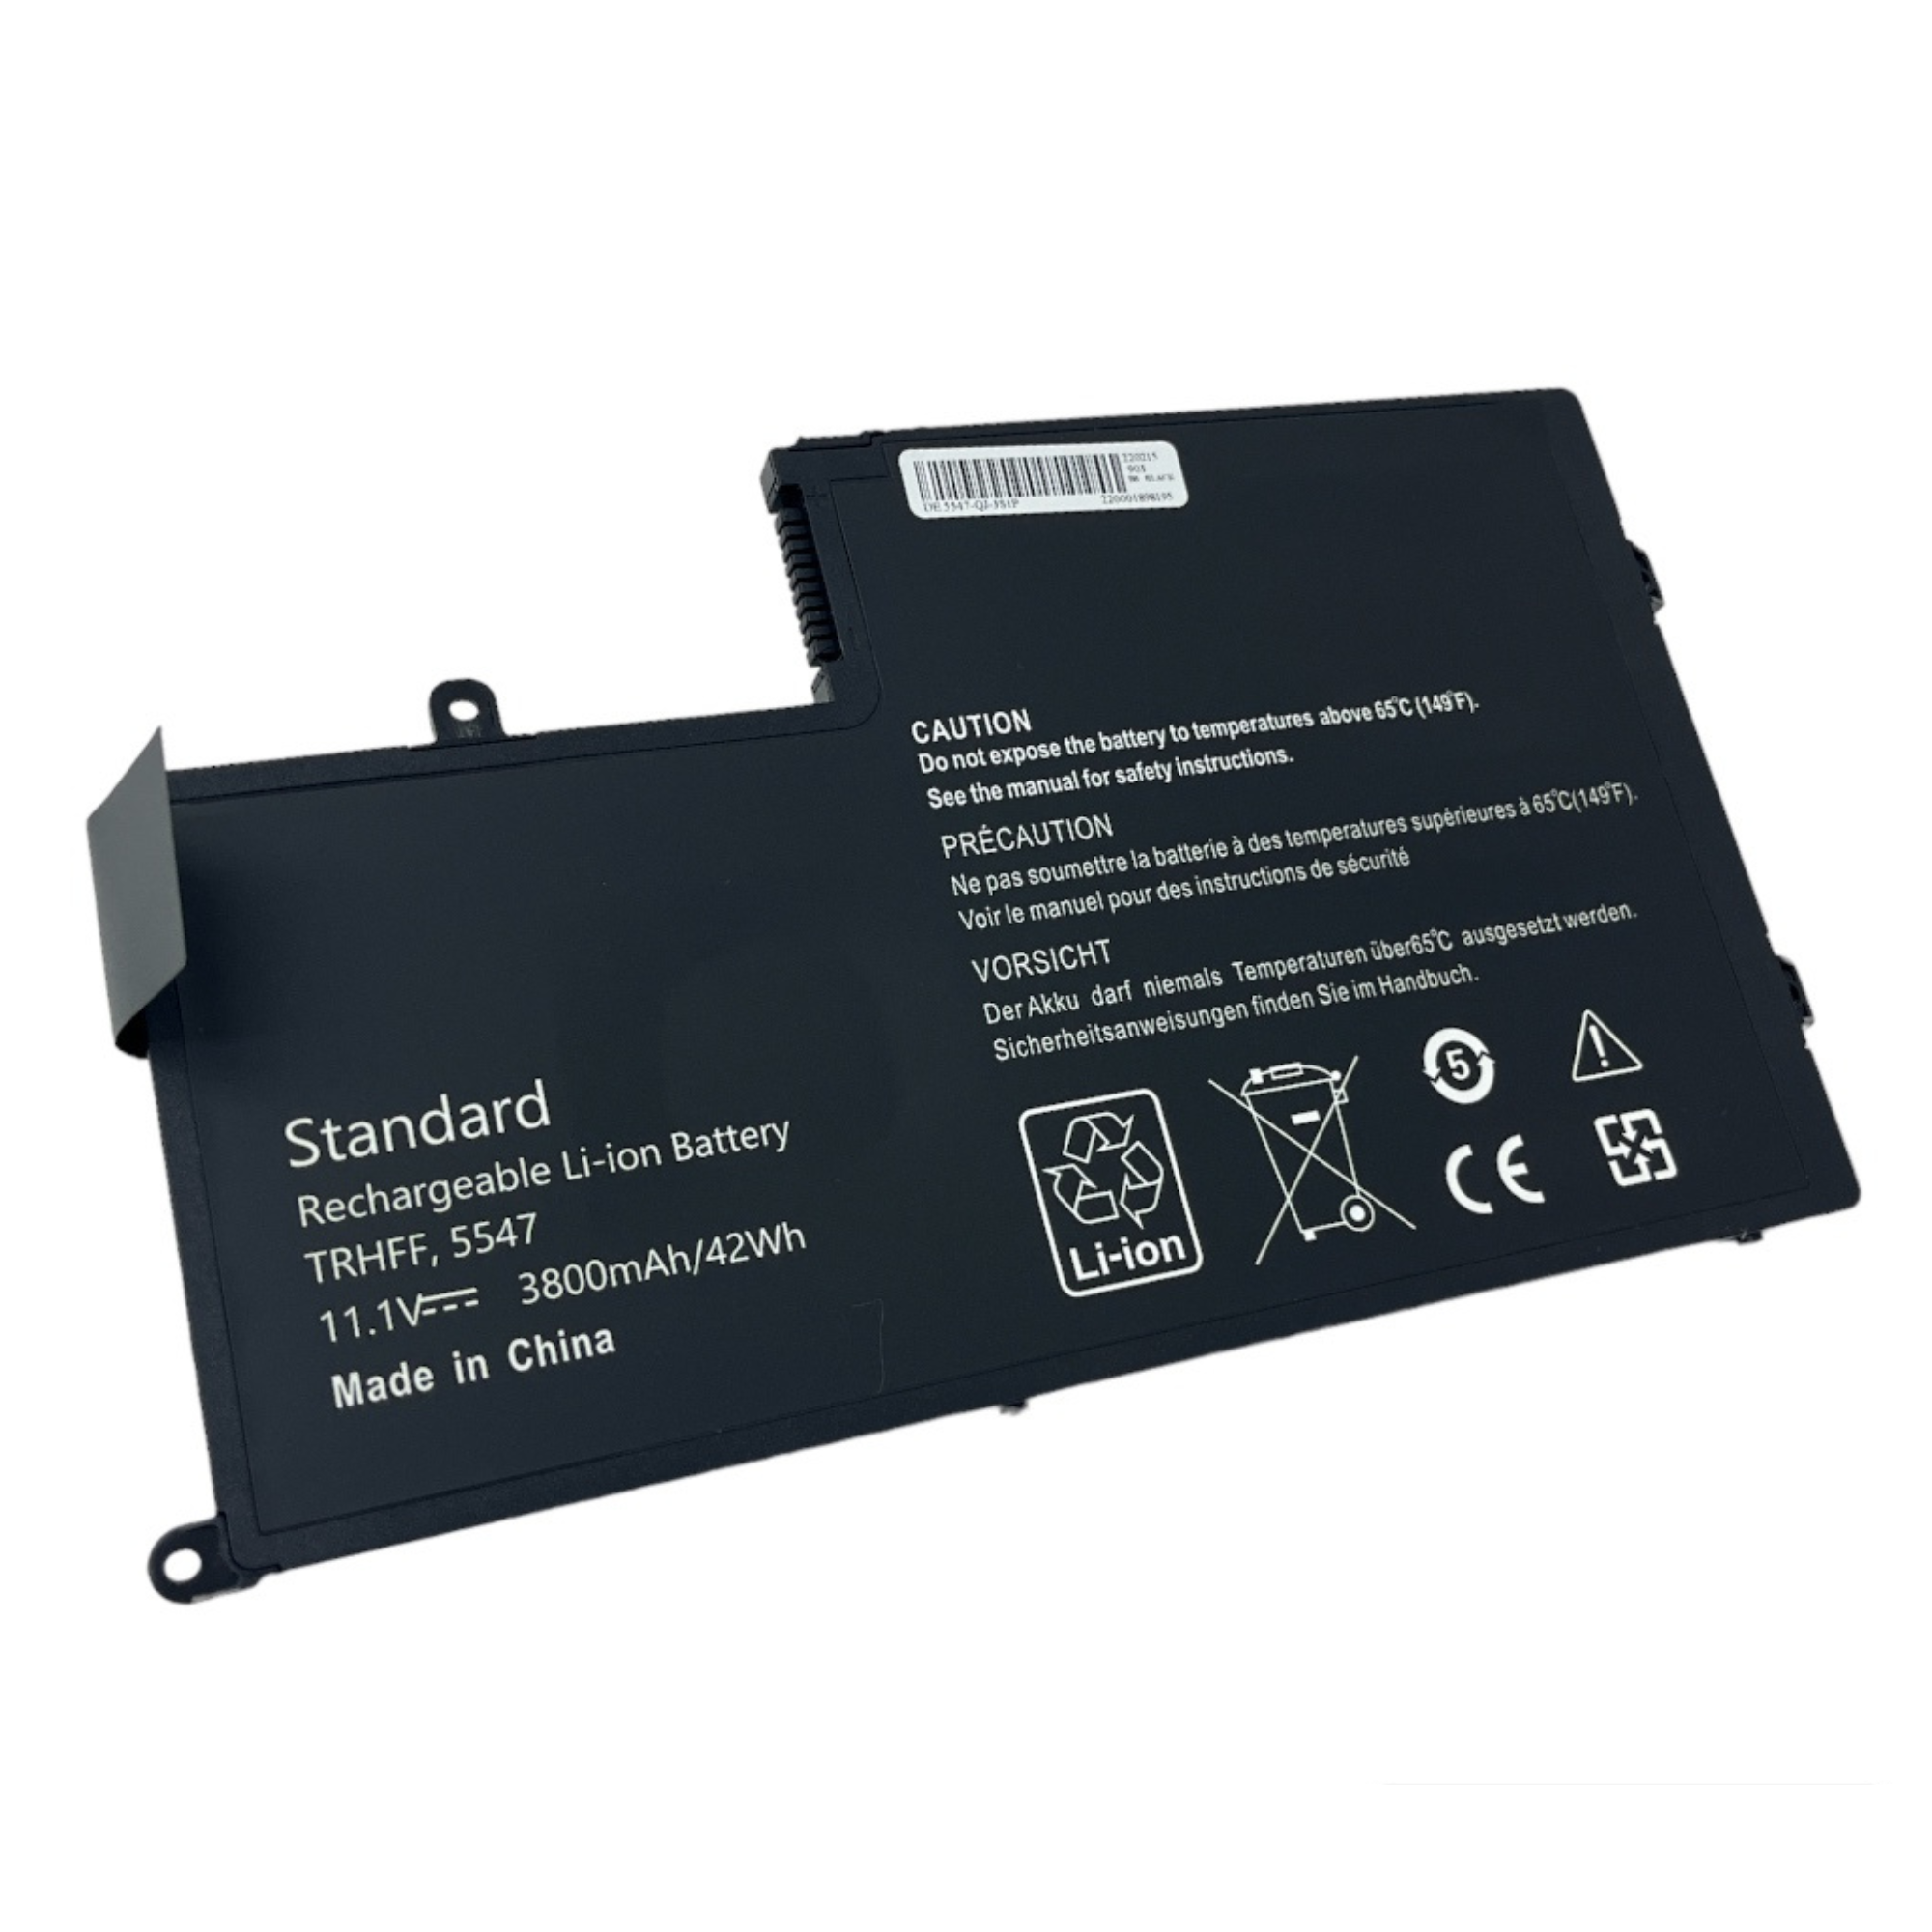 Bateria Dell Inspiron 5547 Trhff 11.1V - Neide Notebook